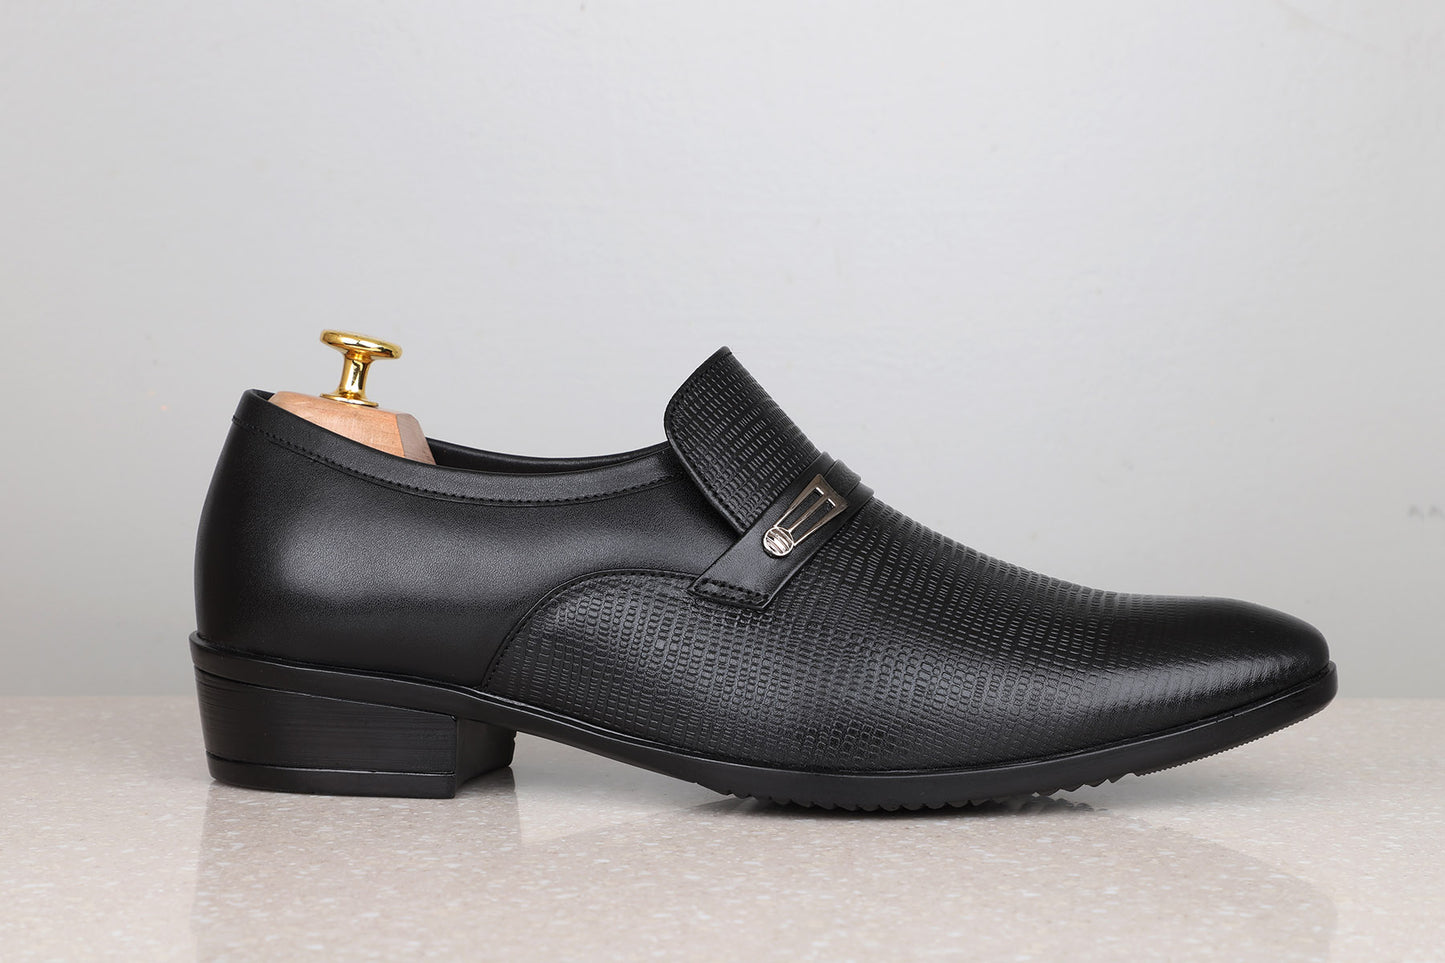 Privo Formal Slipon Shoe For Men